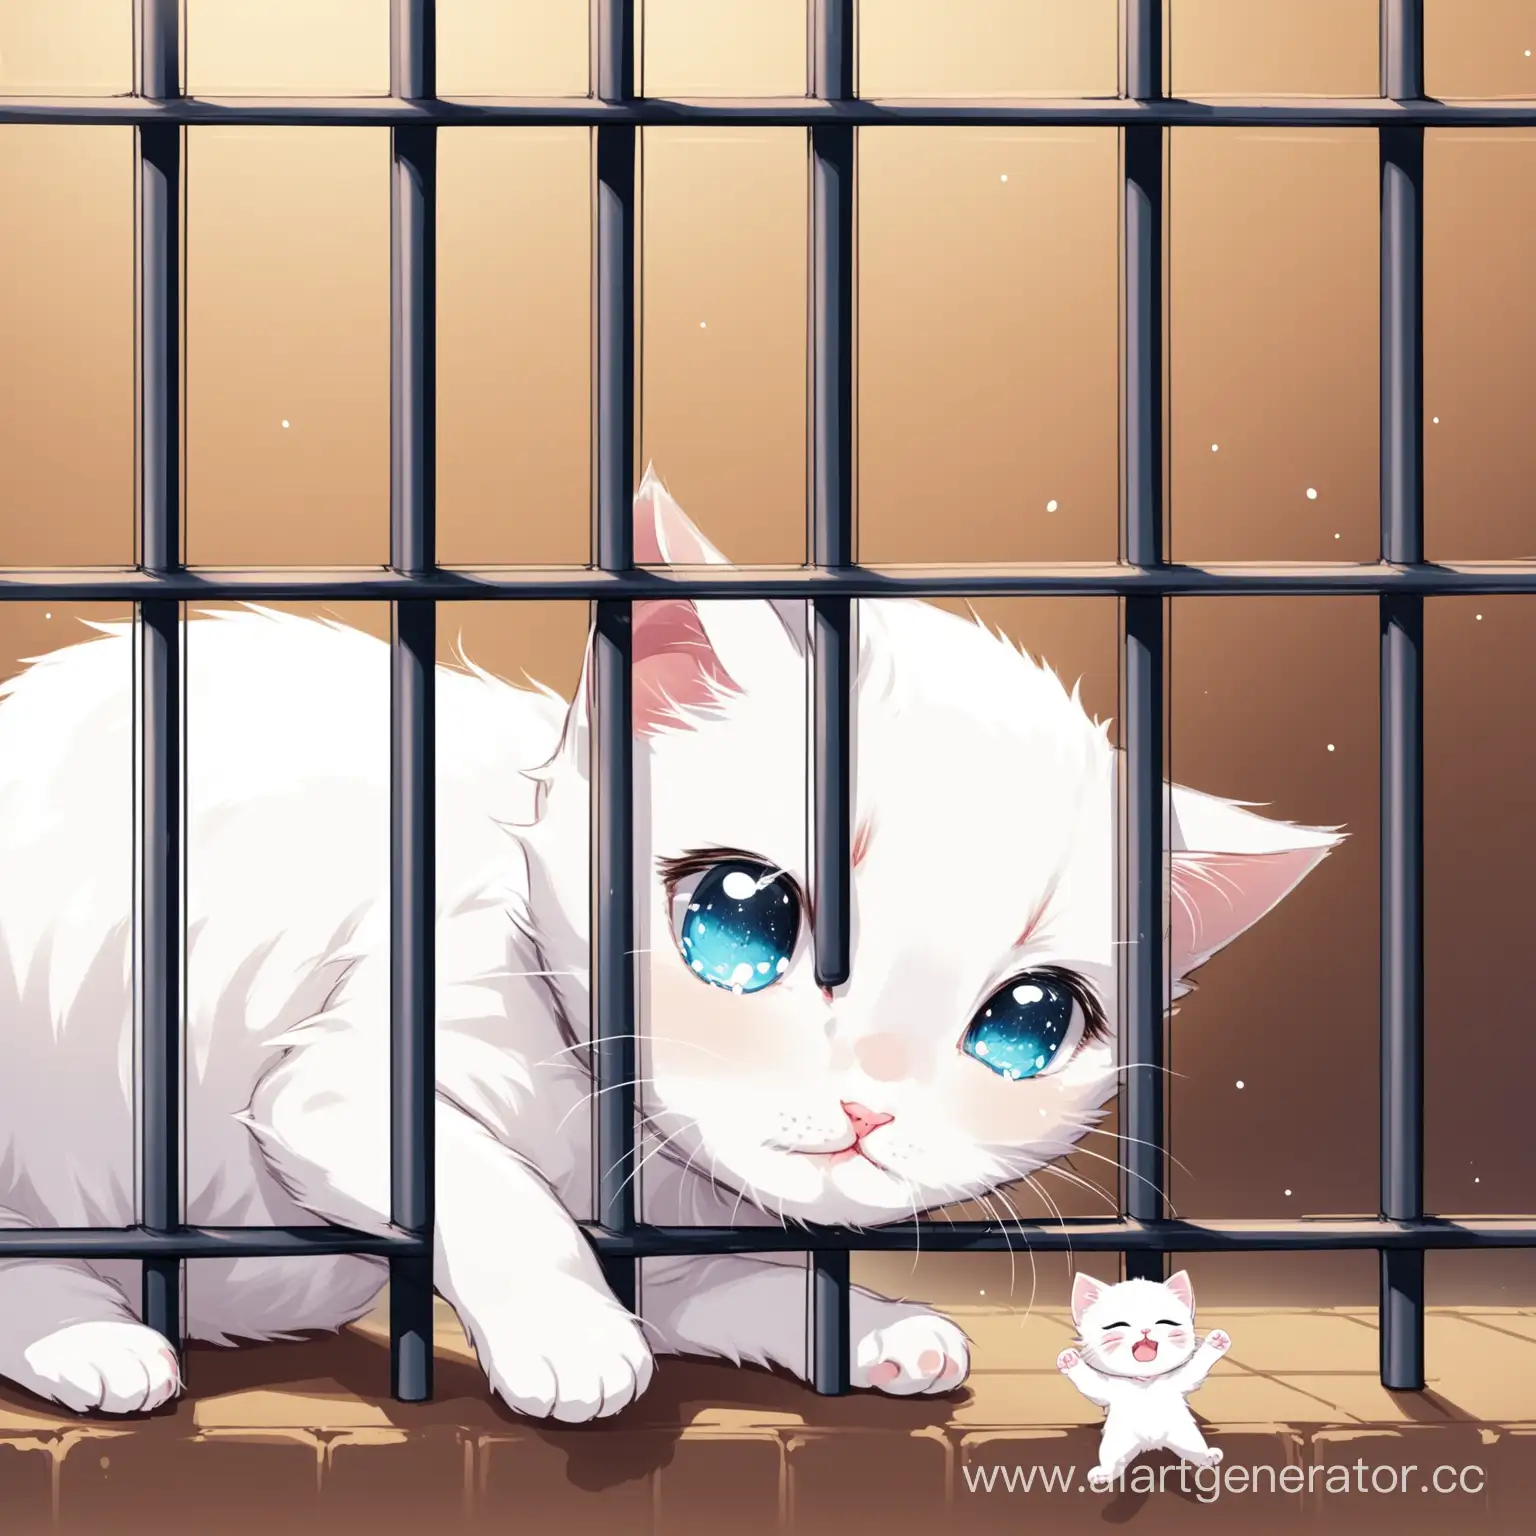 Sad-White-Kitten-Crying-in-Jail-for-Stealing